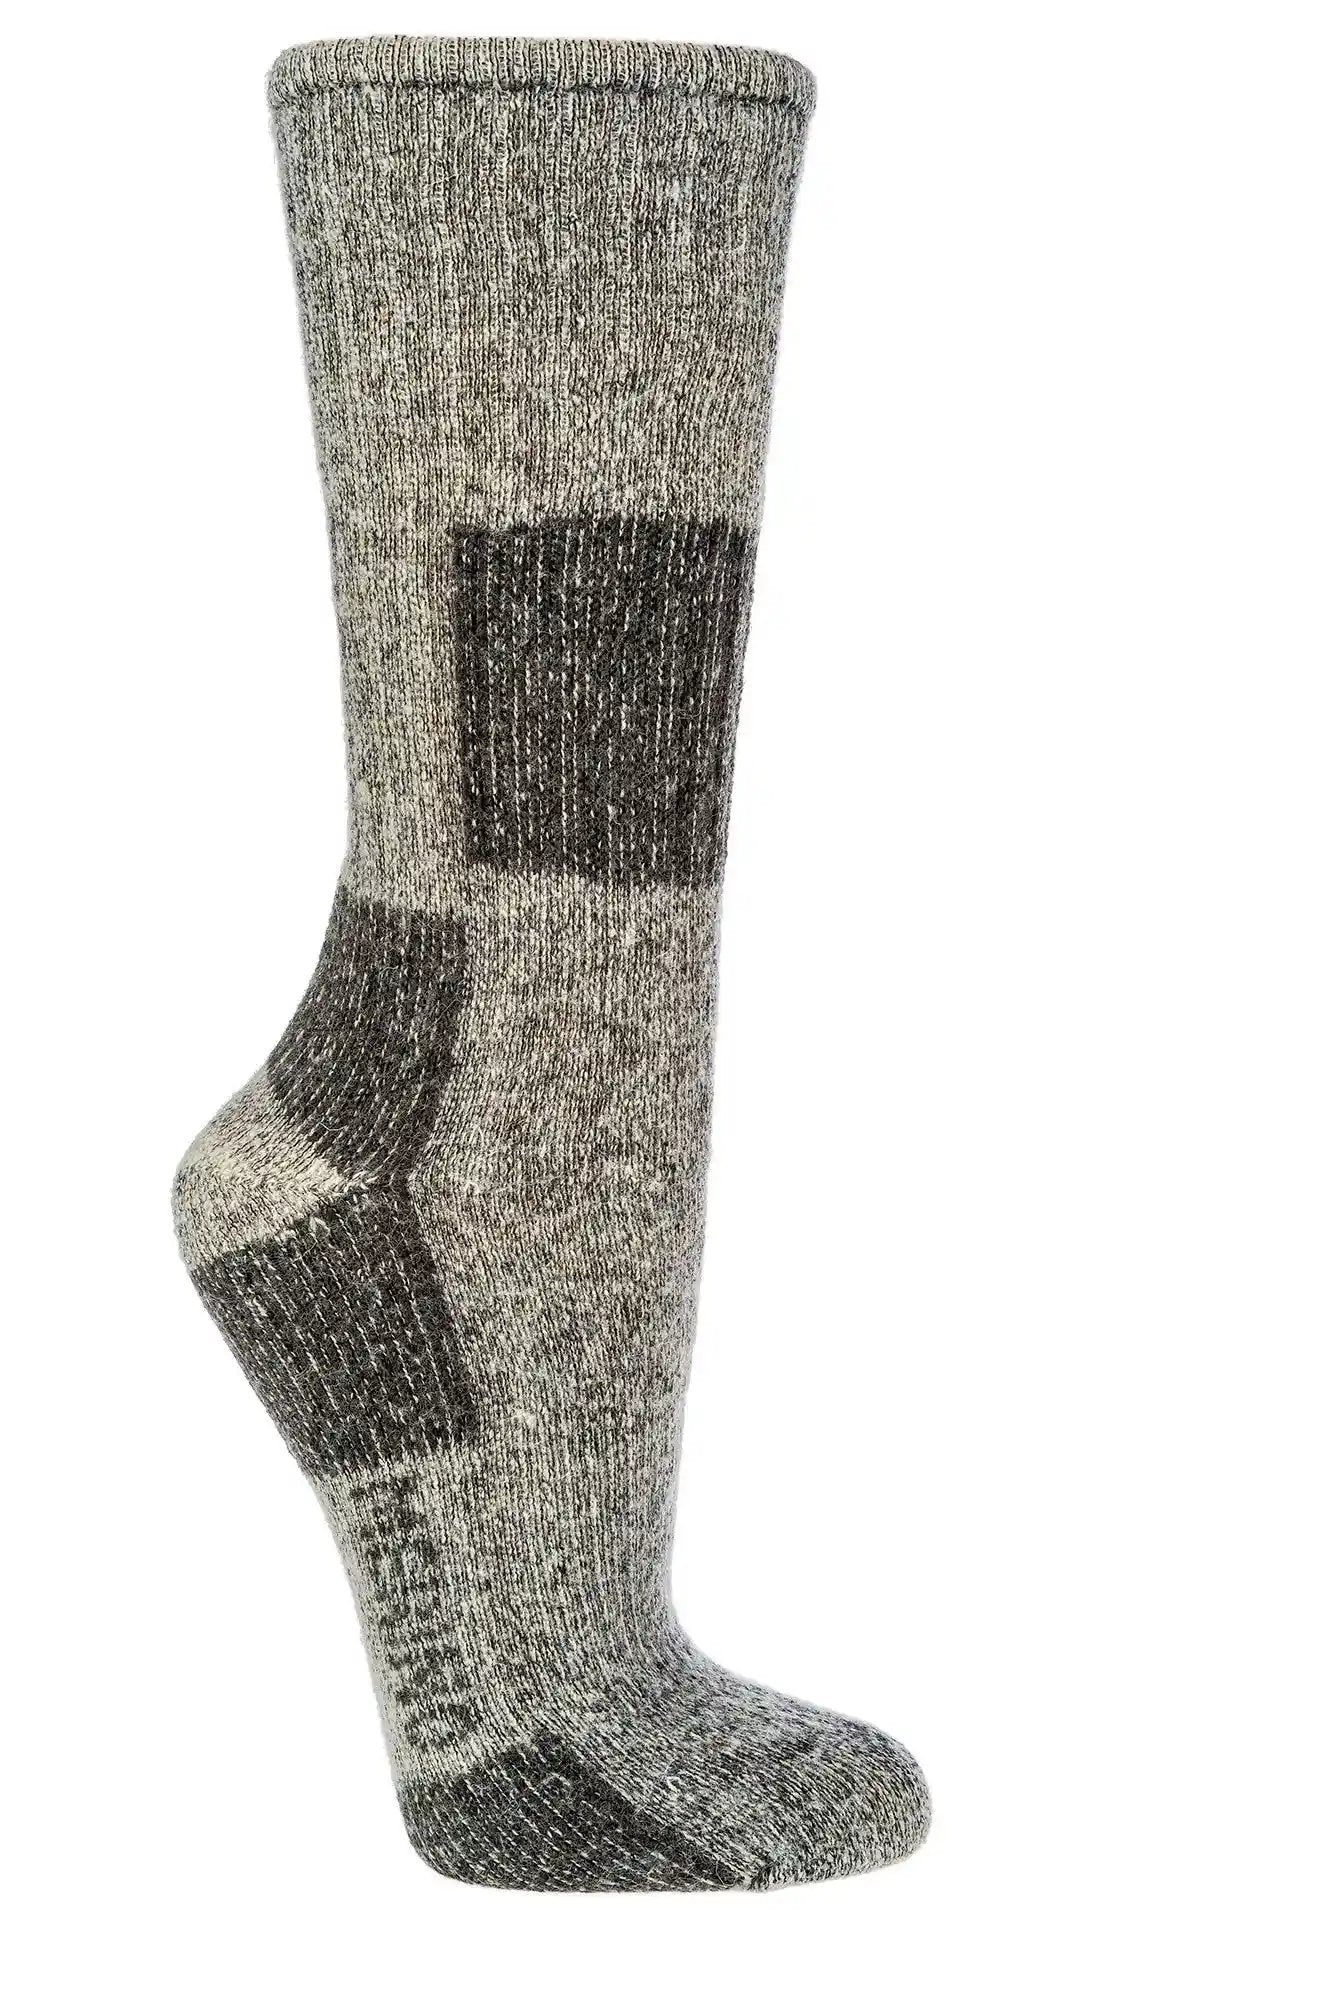 1 pair of MEGA 85% merino wool trekking socks, hiking socks, outdoor sports socks